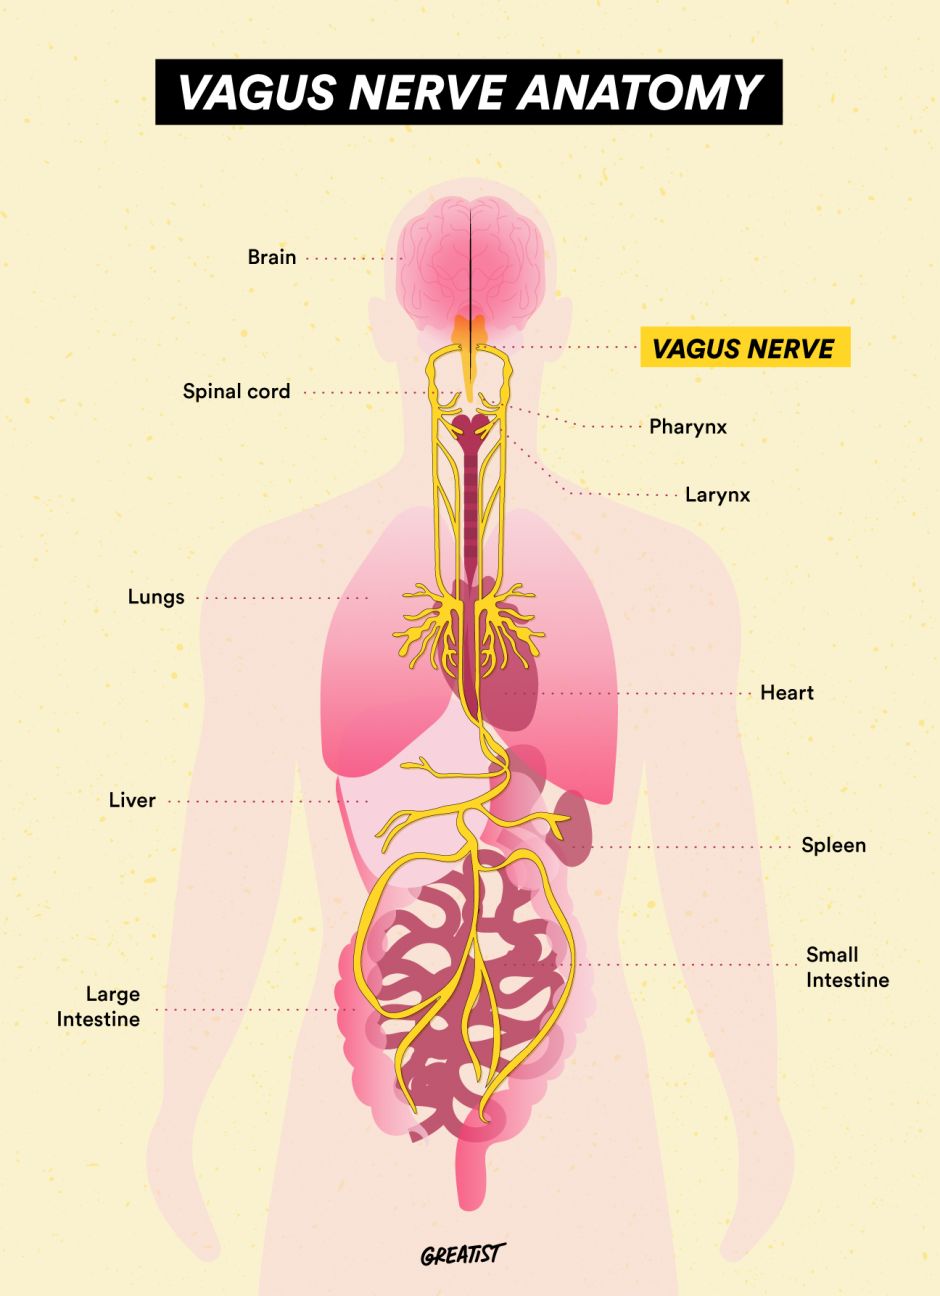 Vagus Nerve: Function, Stimulation, and Treatment